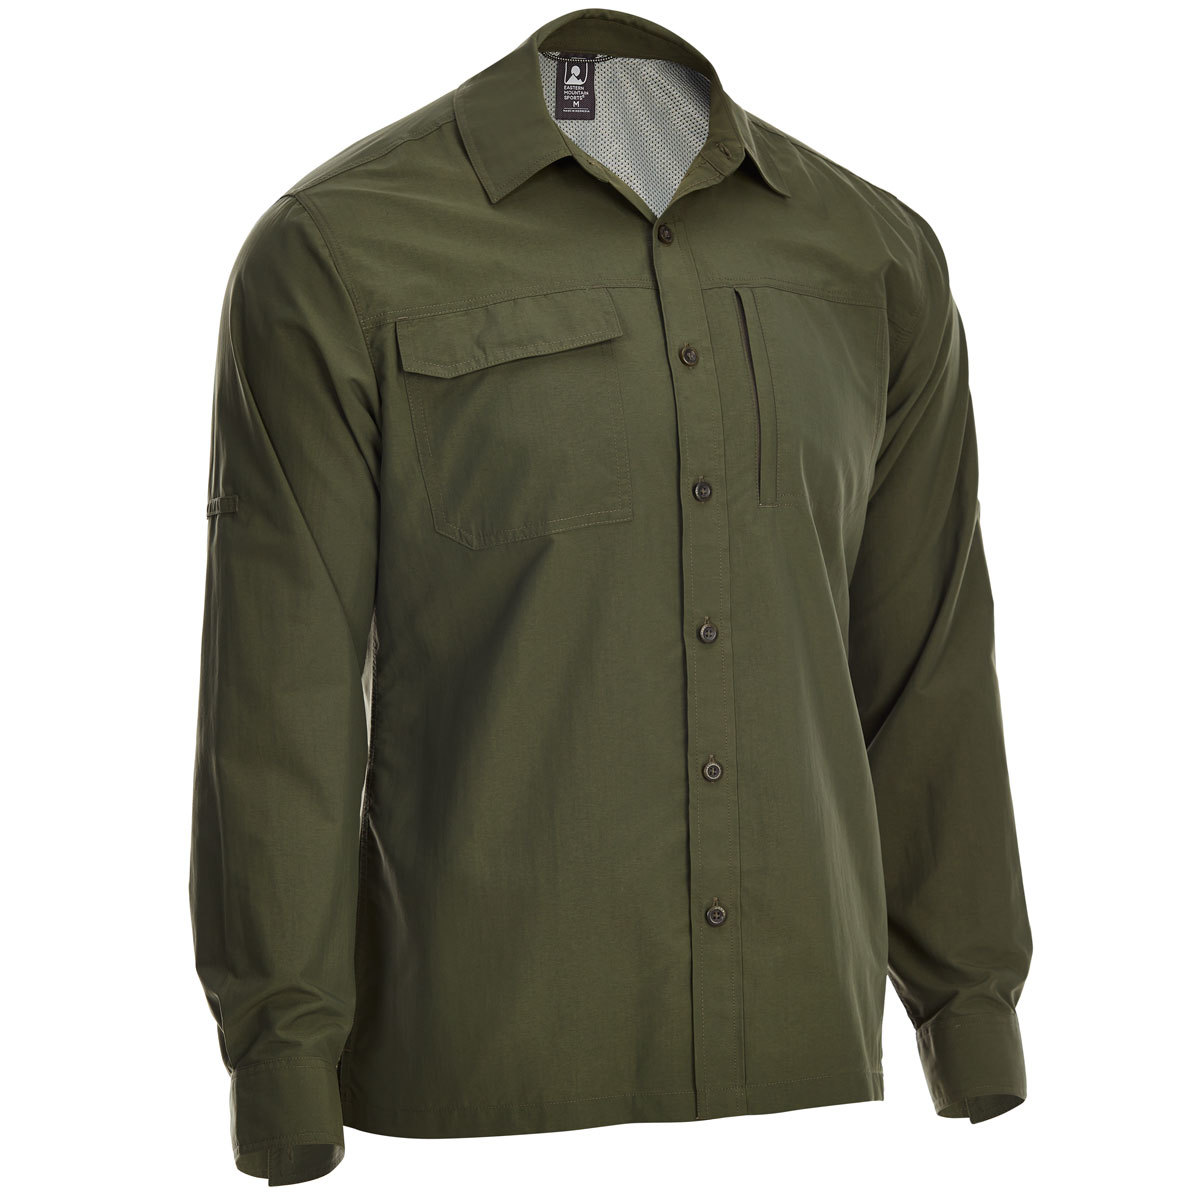 Ems Men's Trailhead Upf Long-Sleeve Shirt - Green, S